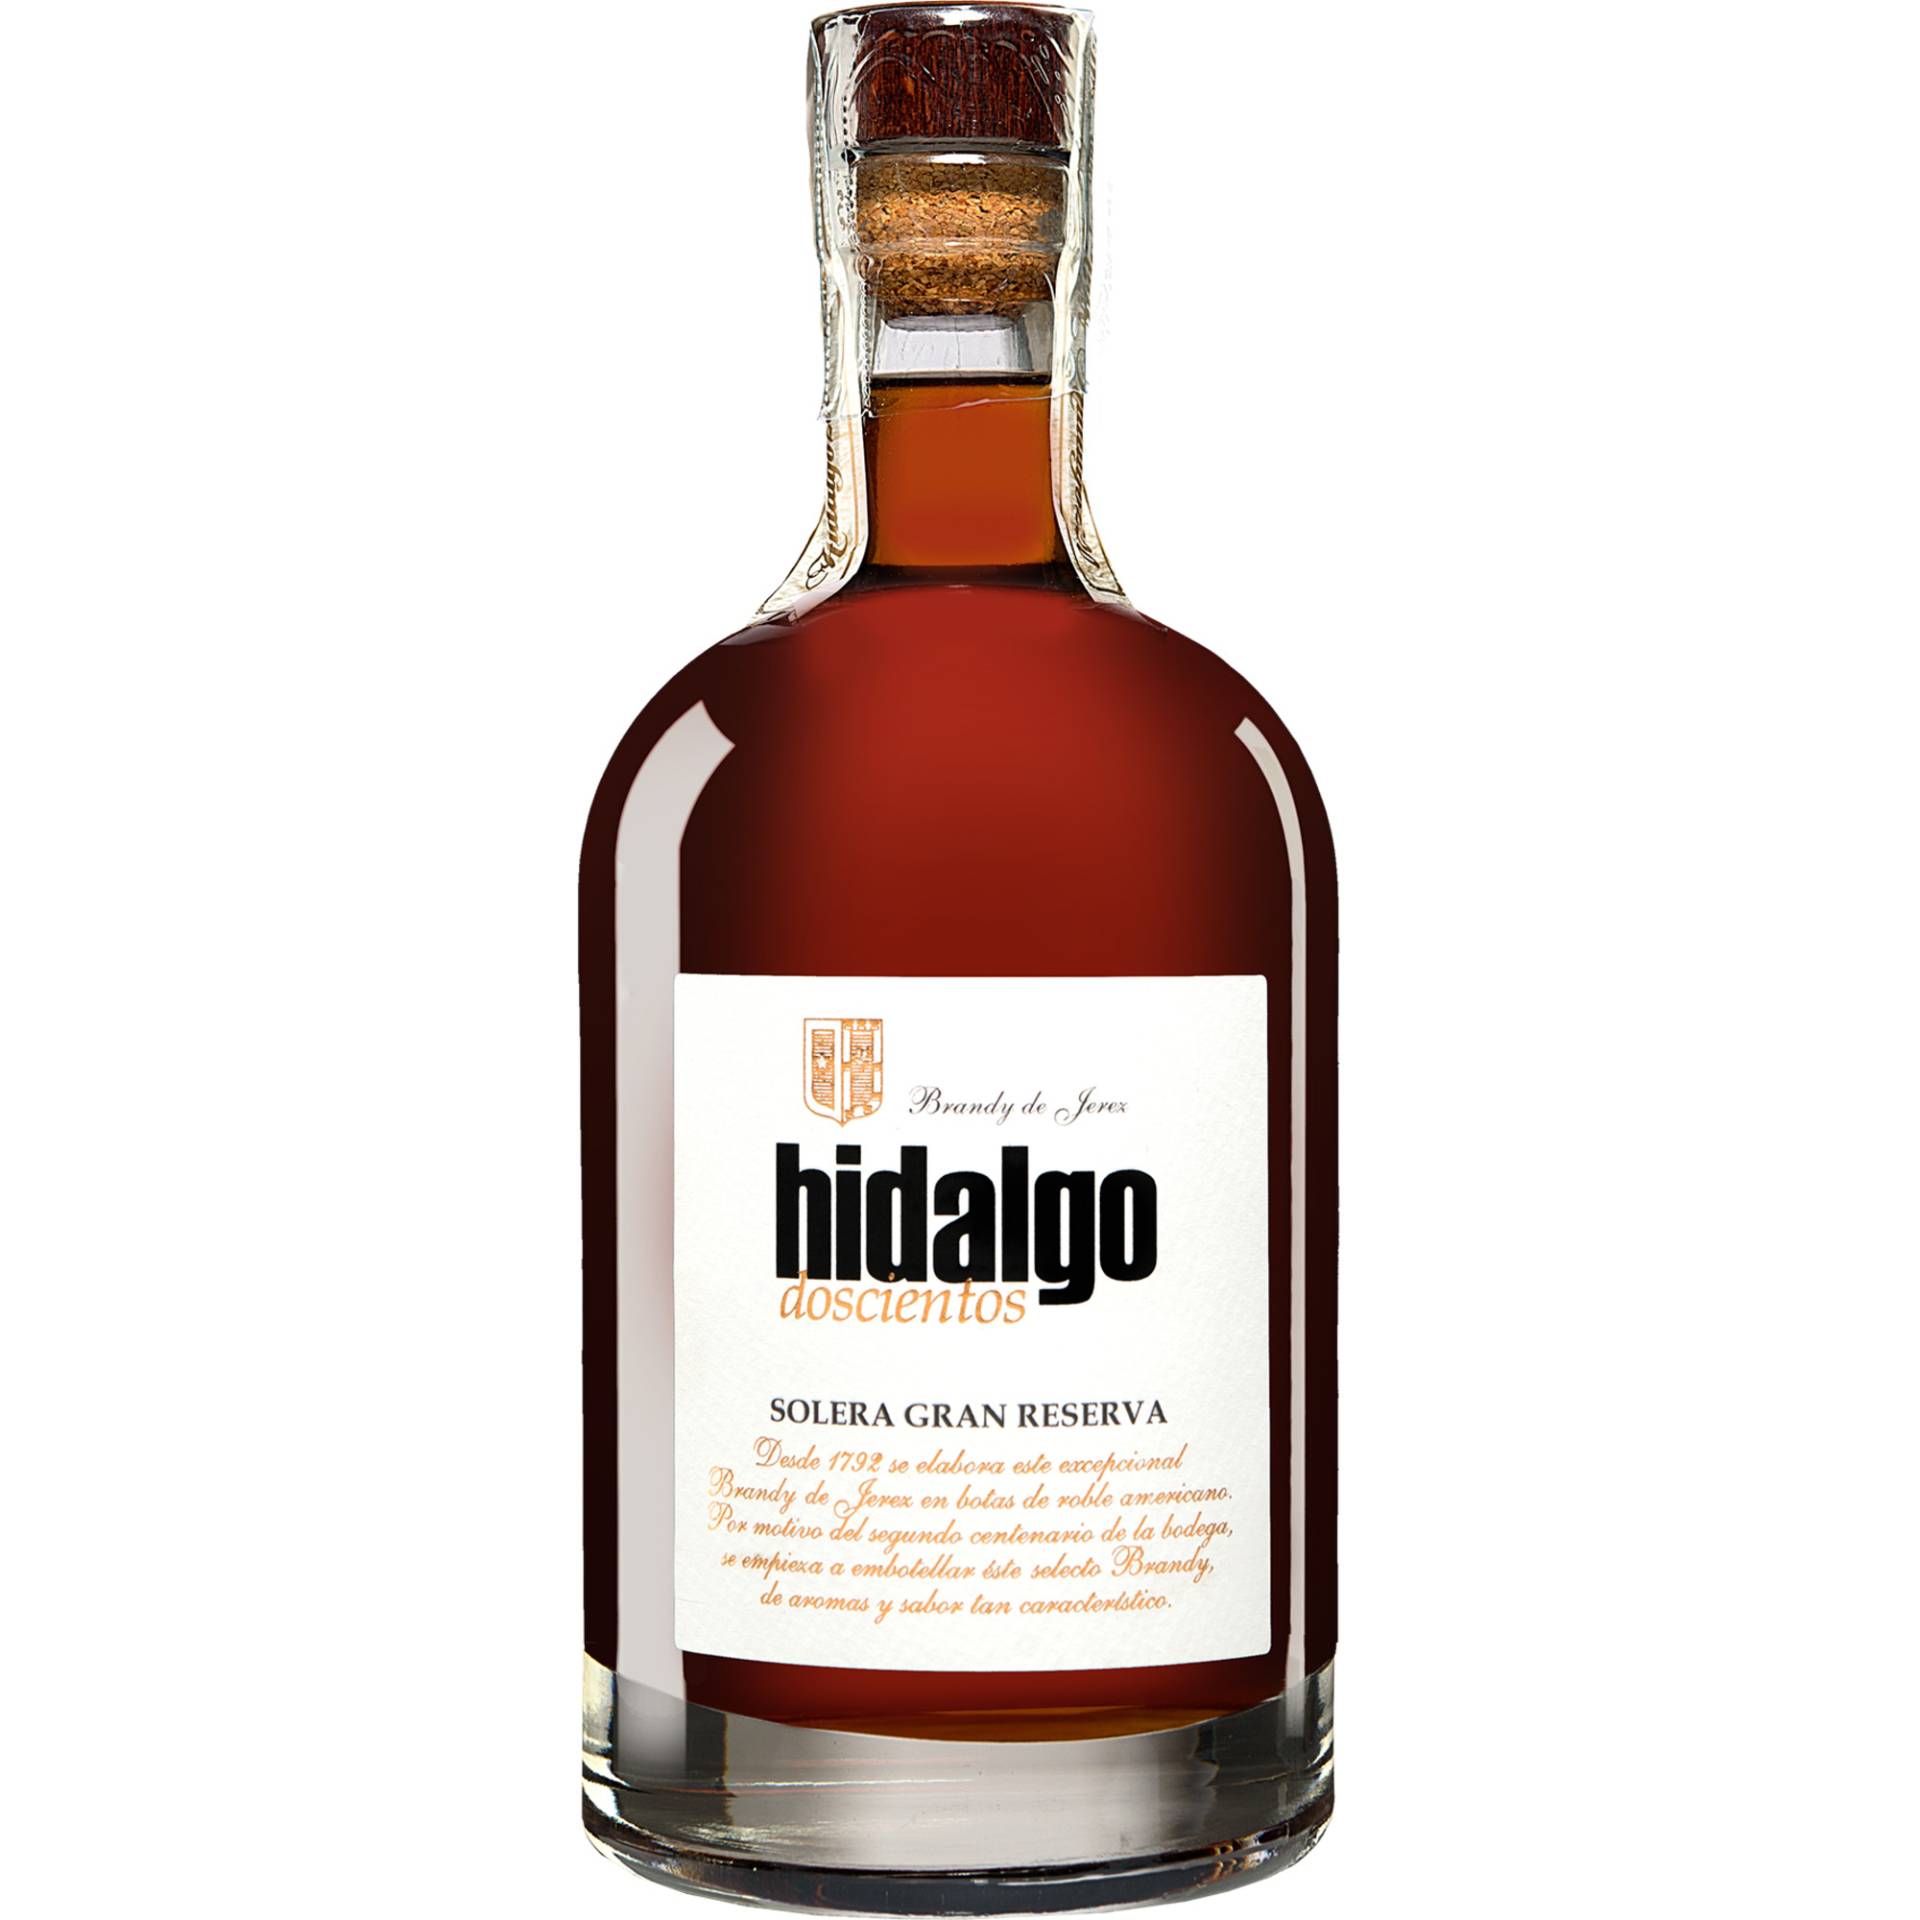 Brandy Hidalgo »200« Gran Reserva - 0,7L.  0.7L 40% Vol. Brandy aus Spanien von Bodegas Hidalgo - La Gitana, S.A.